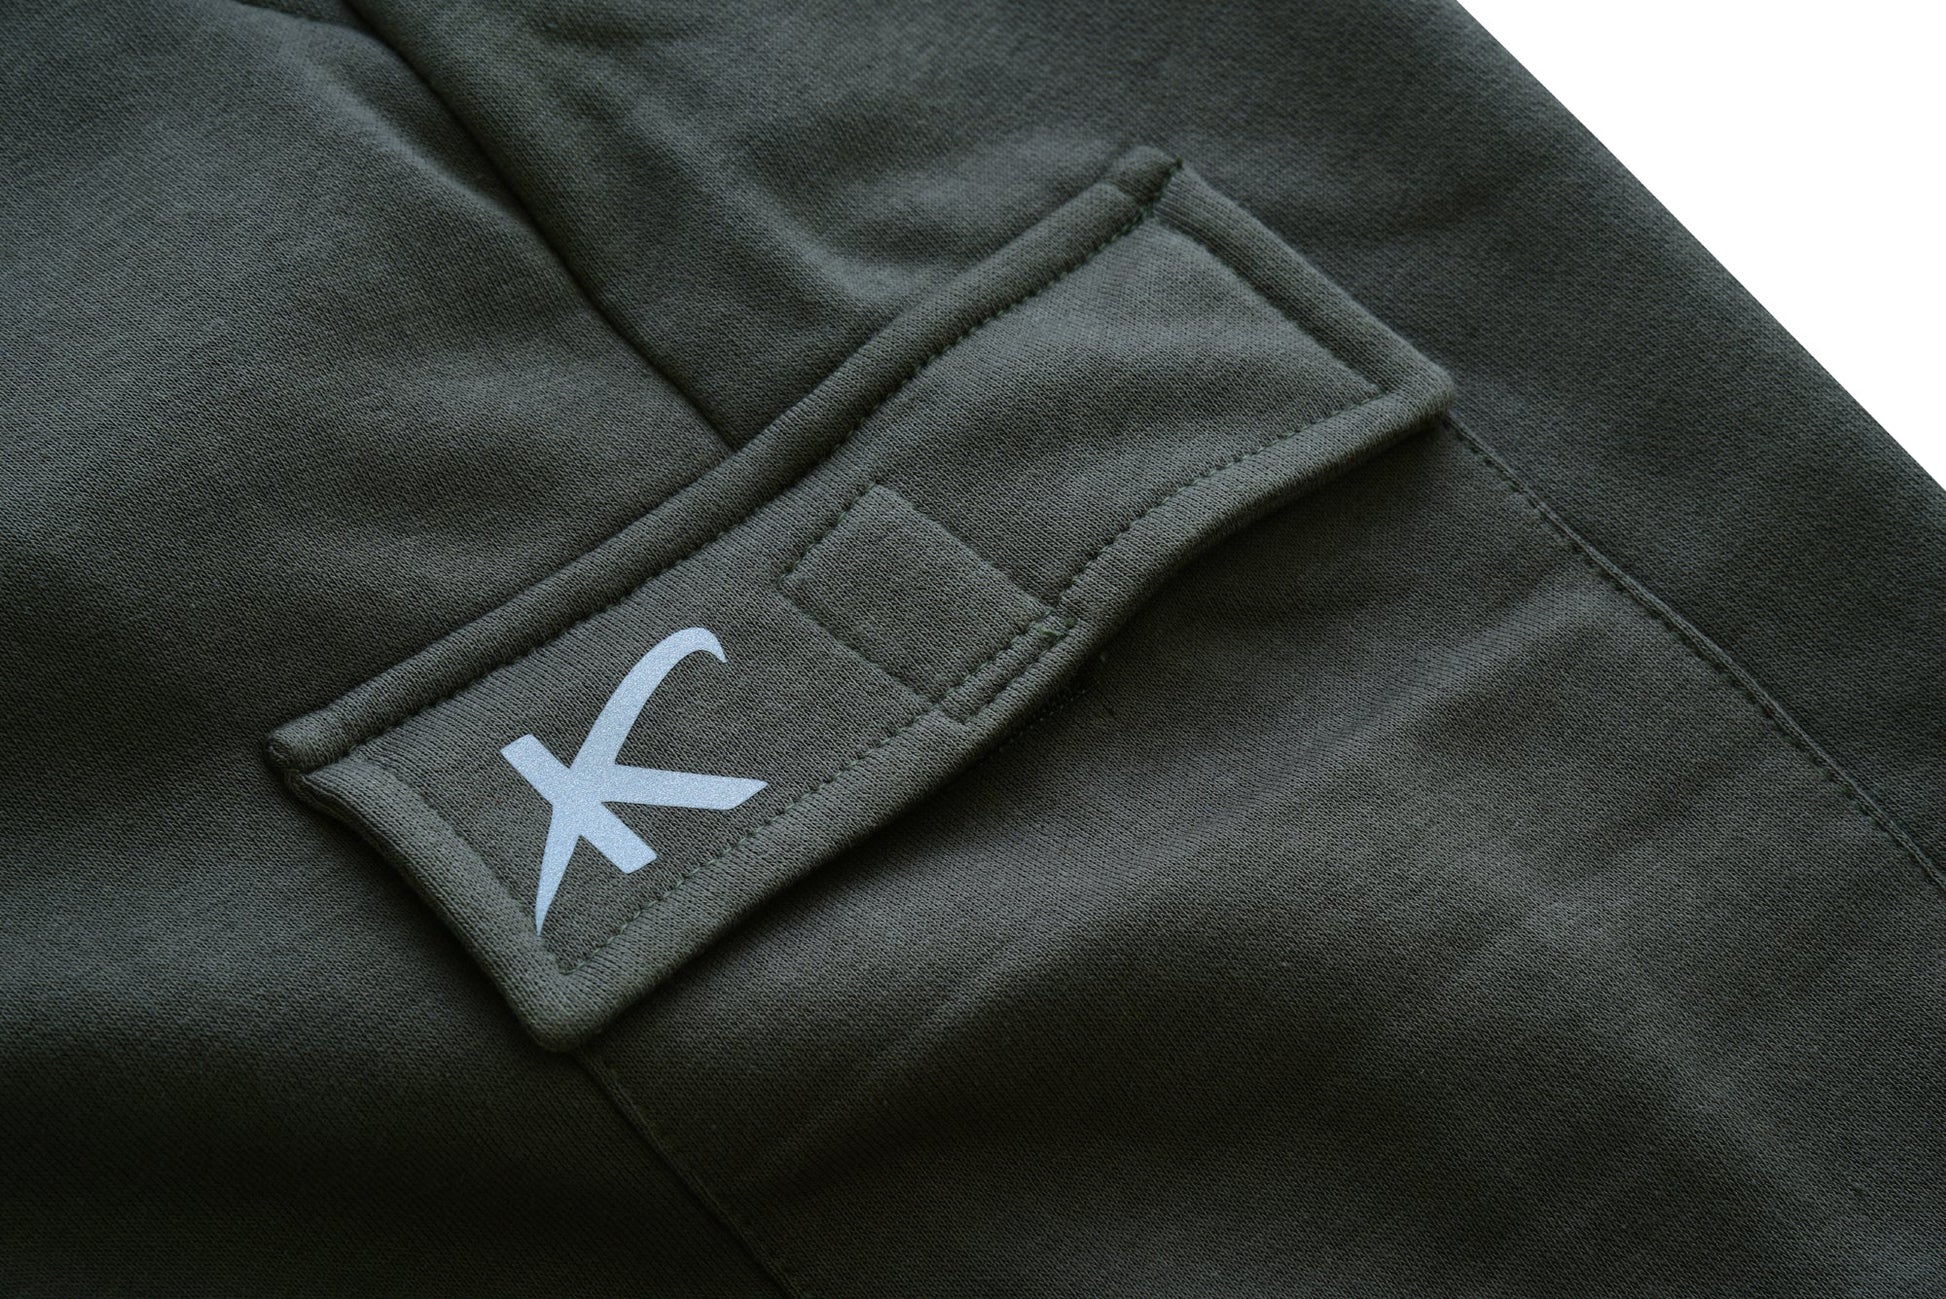 Pantalone in felpa KONUSTEX LYSEO verde #369 - OnTheRoad.shop - KONUSTEX